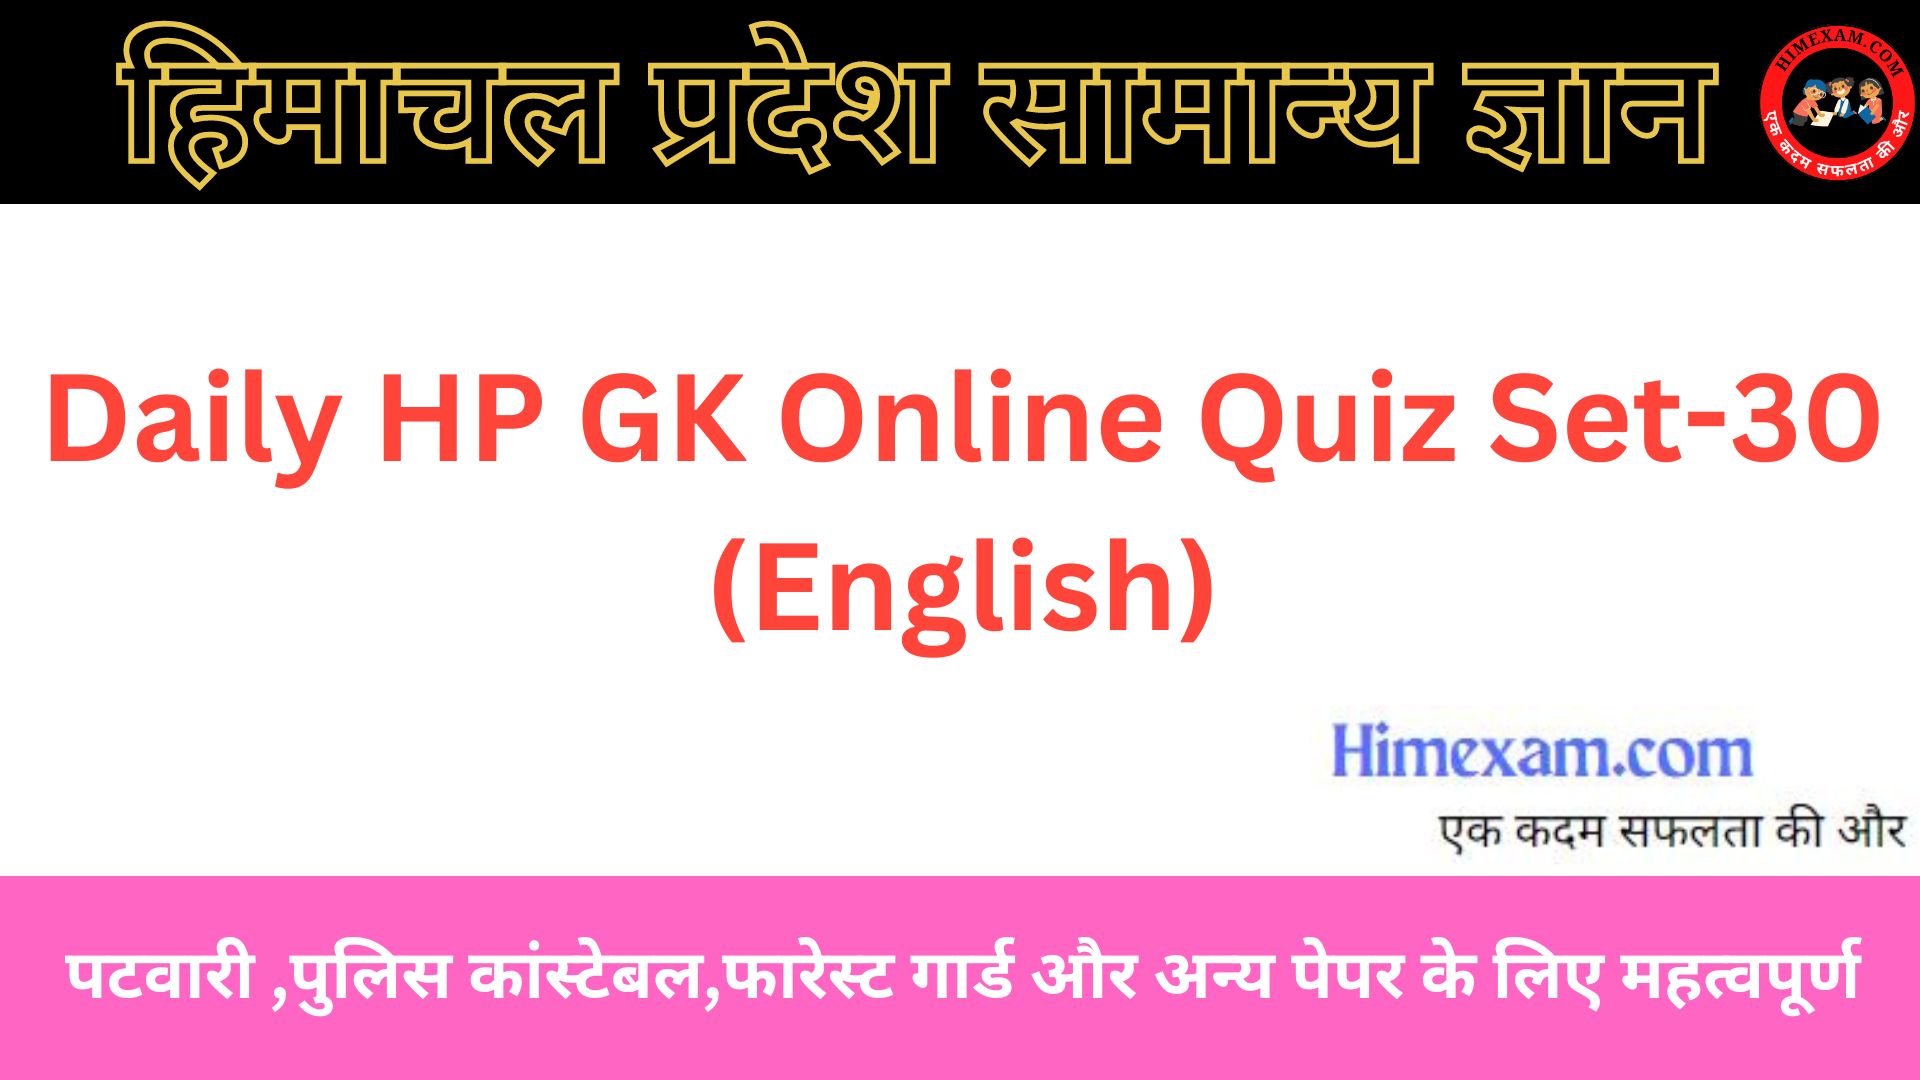 Daily HP GK Online Quiz Set-30 (English)